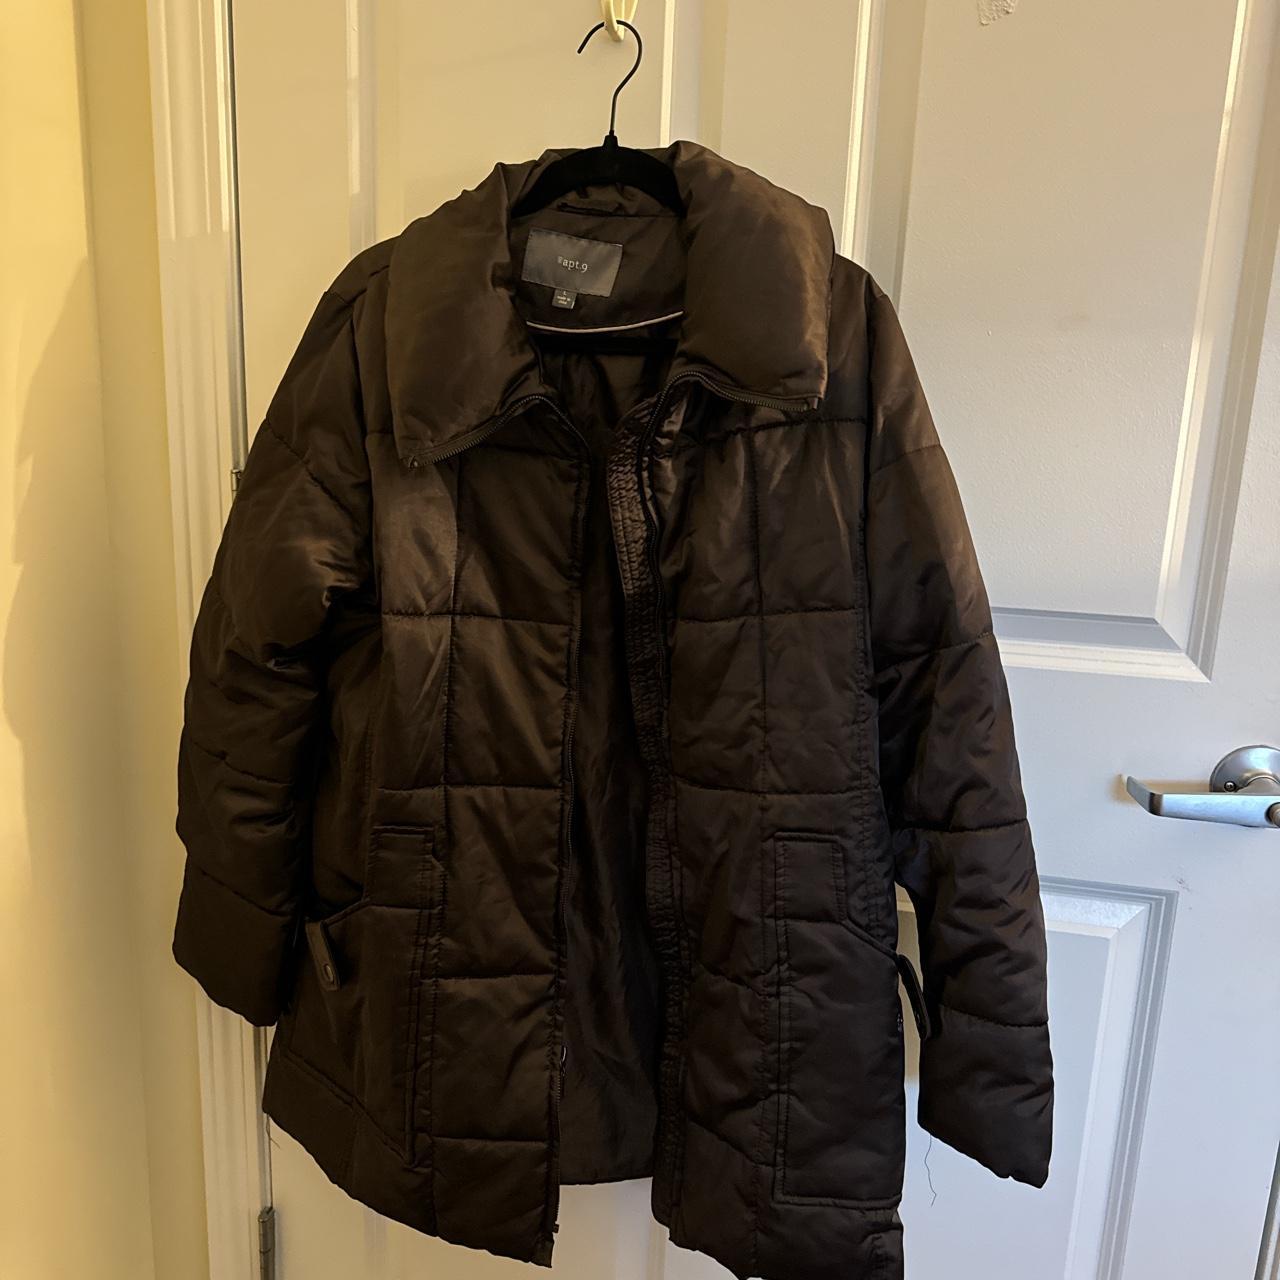 Brown long puffer jacket - Depop